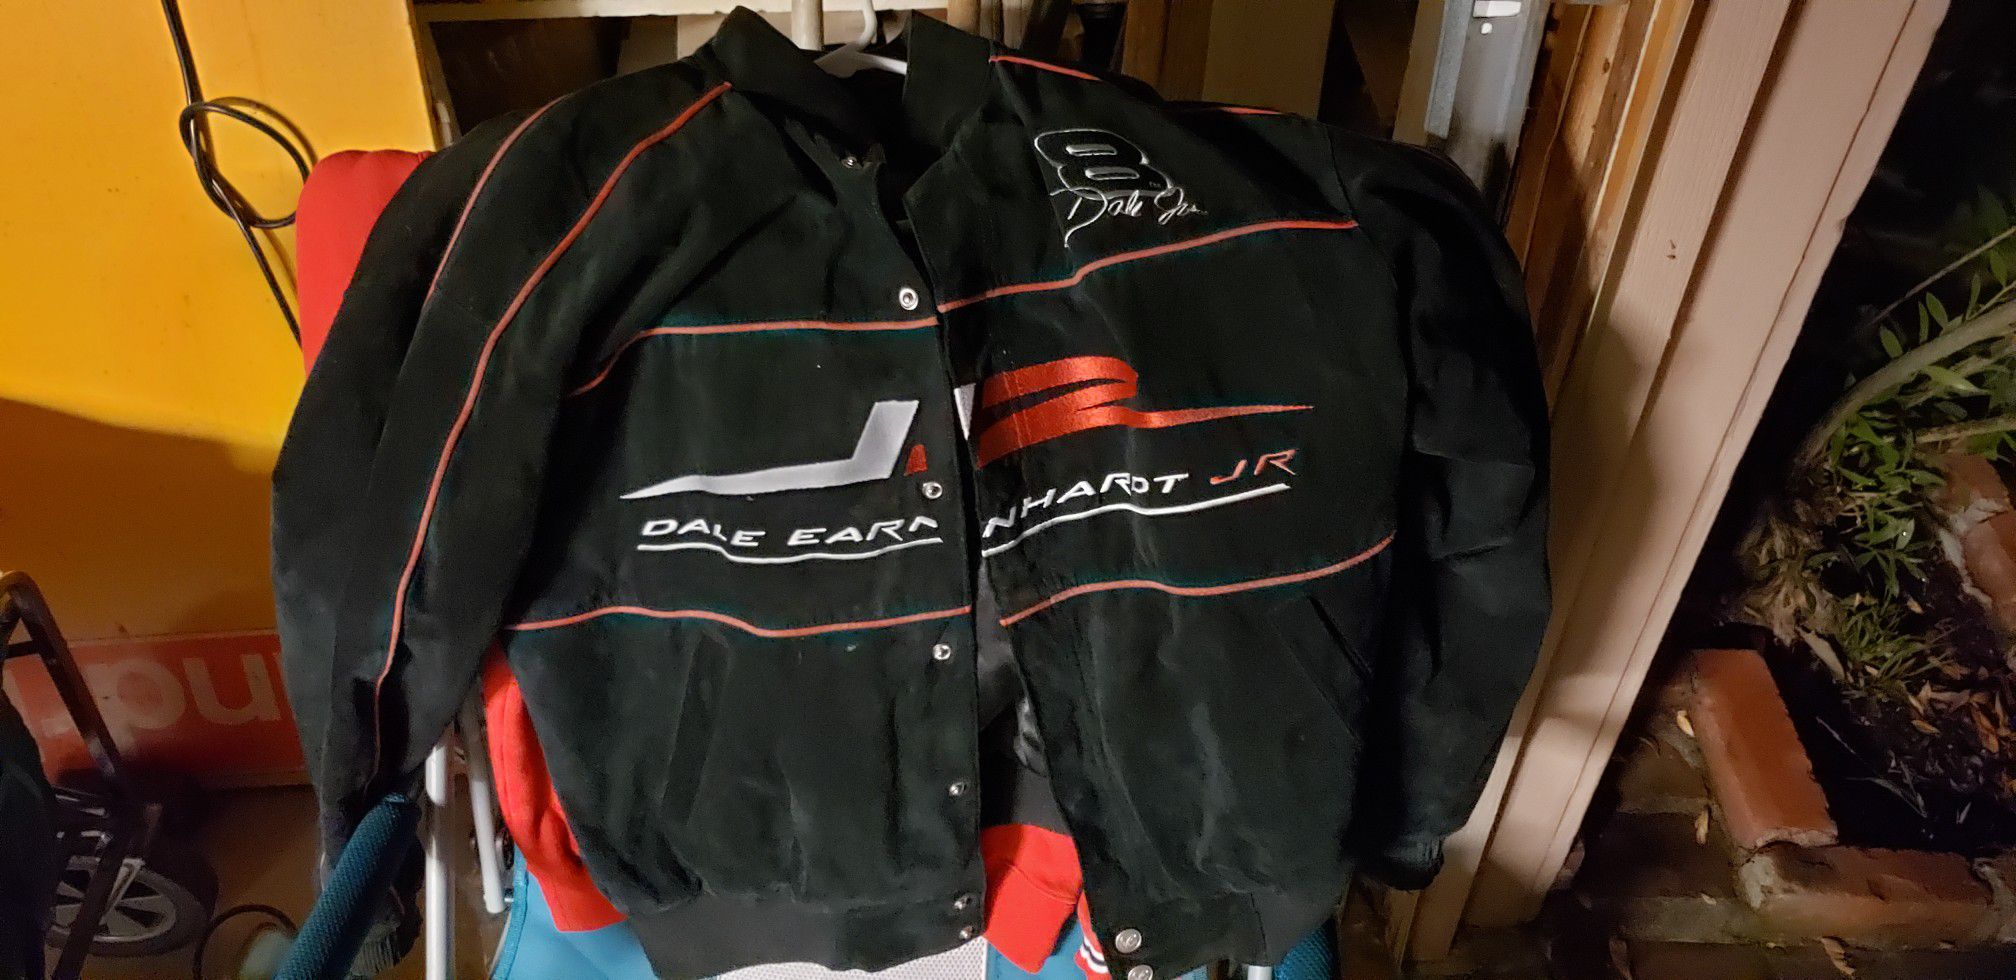 Budweiser Dale Earnhart Jr Leather jacket and sweatshirt combo size medium